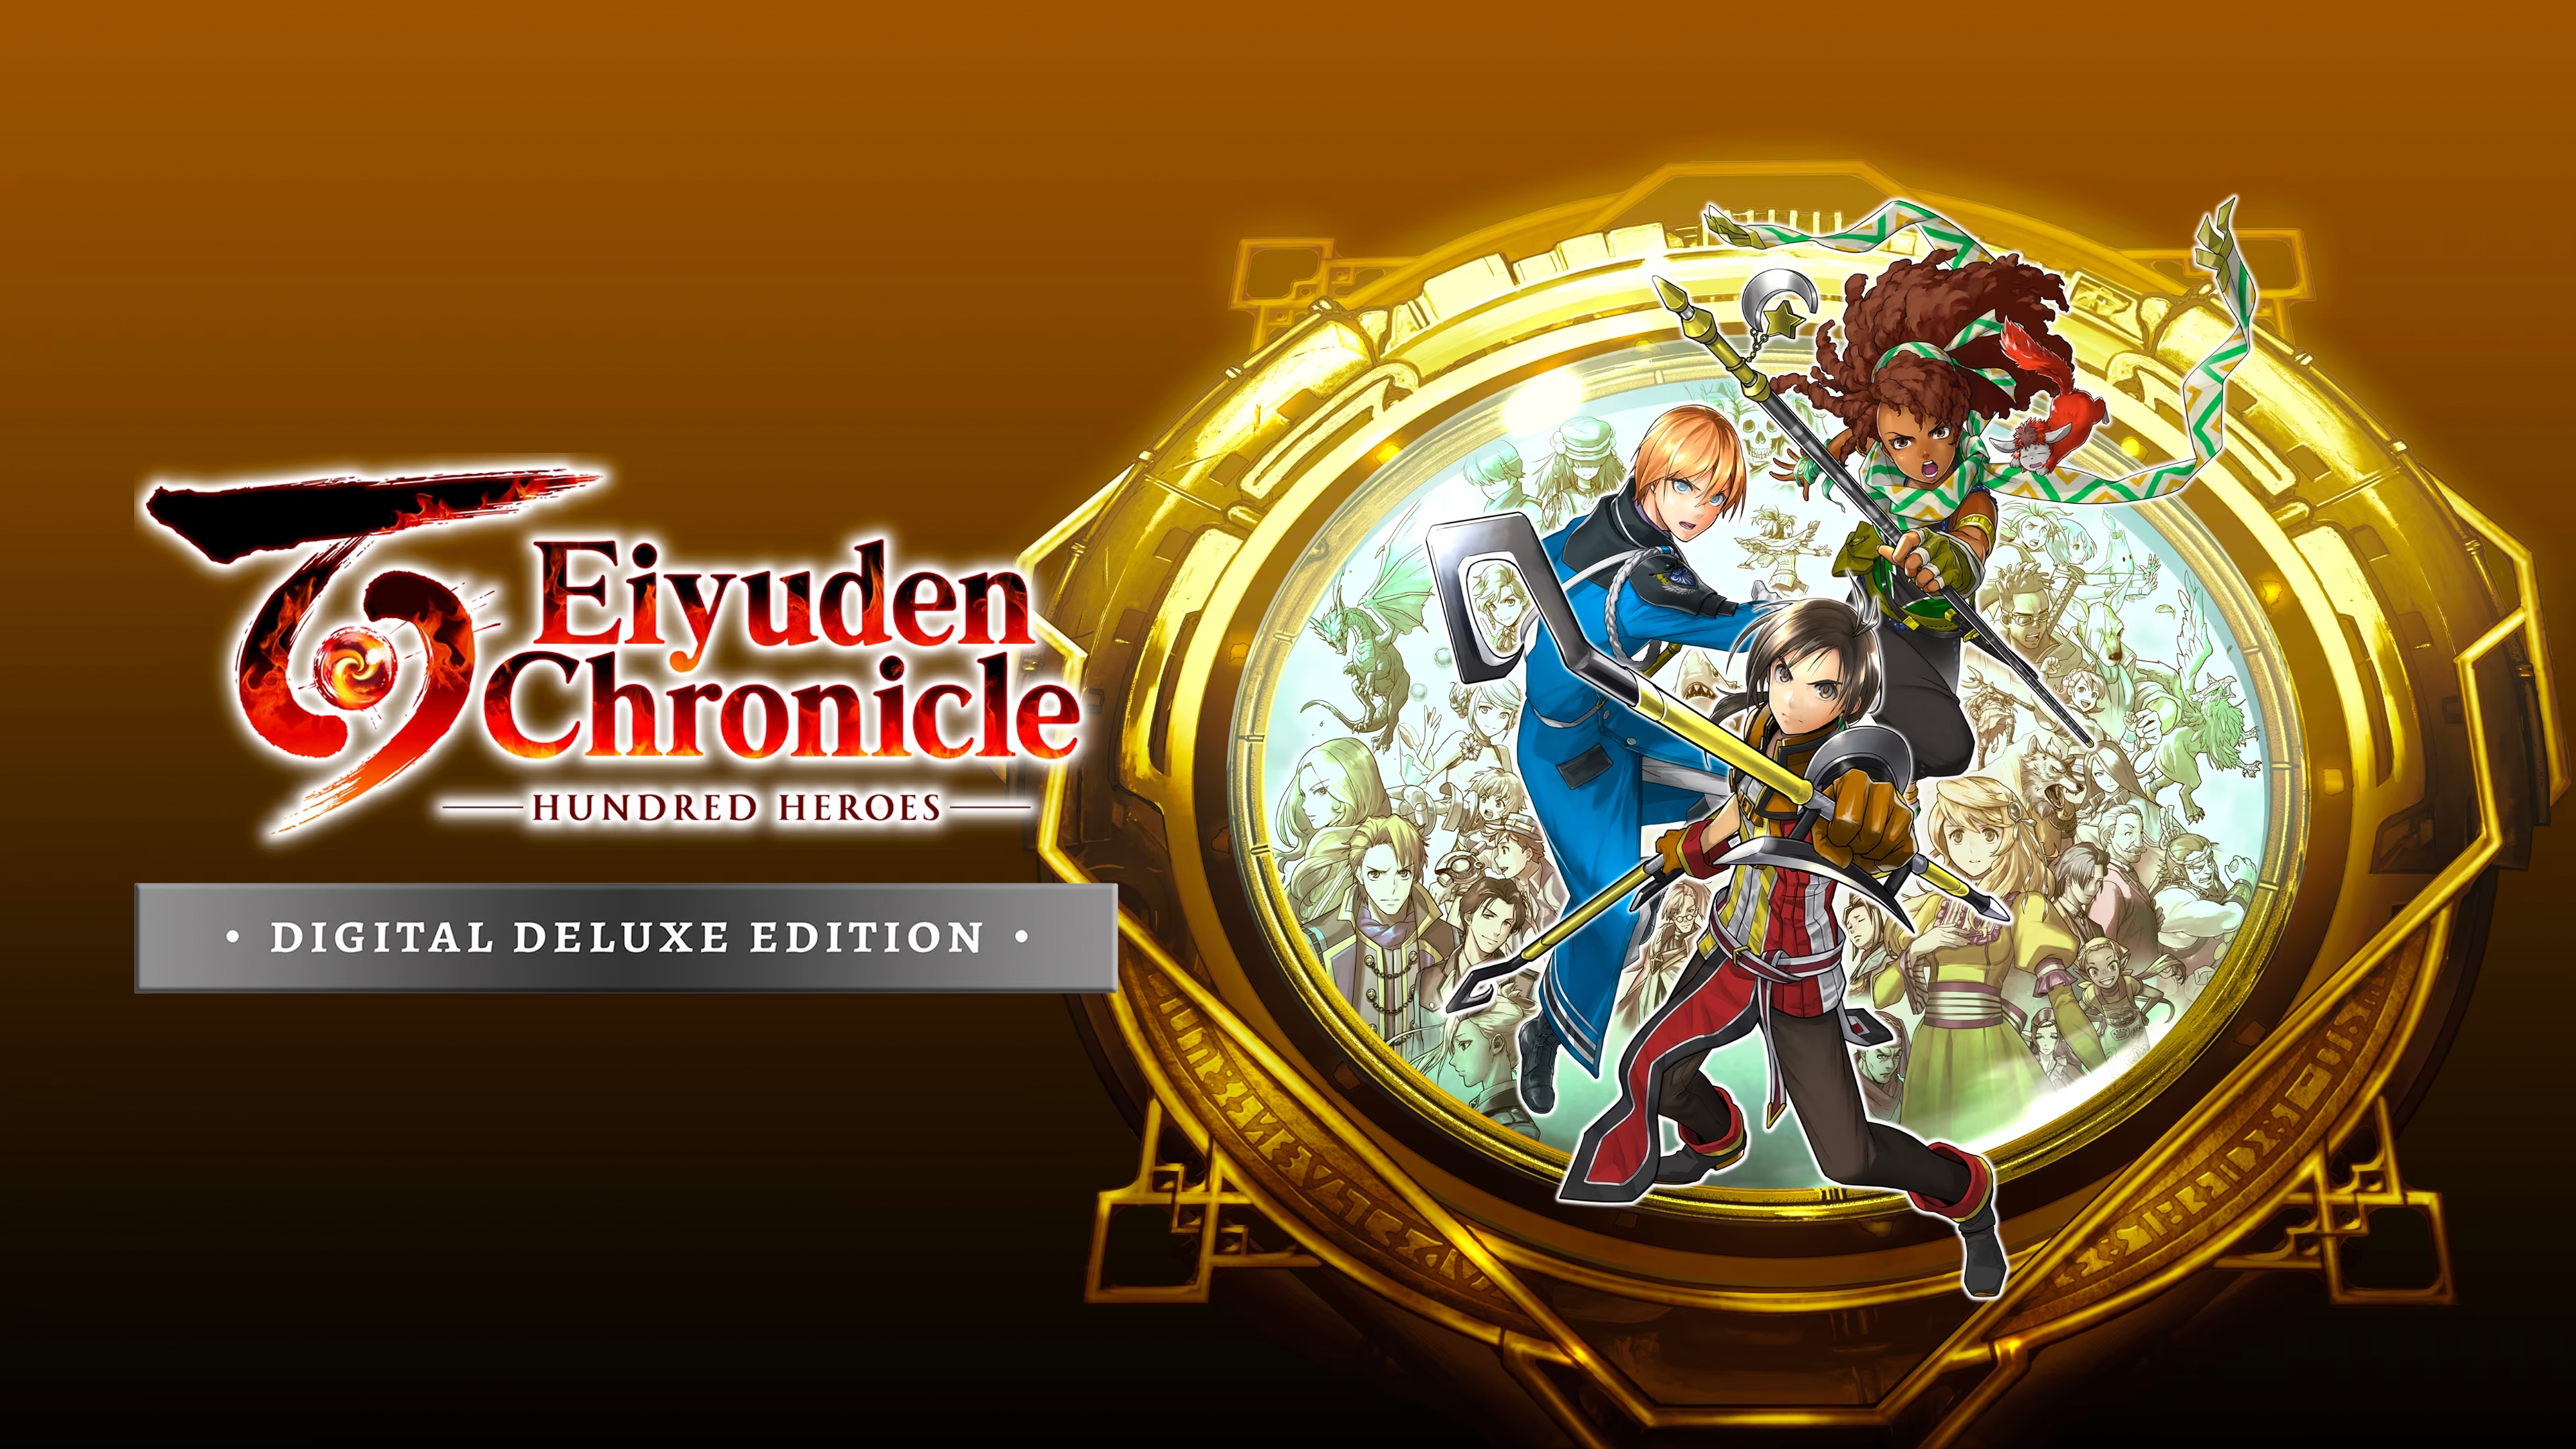 Pre-purchase Eiyuden Chronicle: Hundred Heroes on Steam